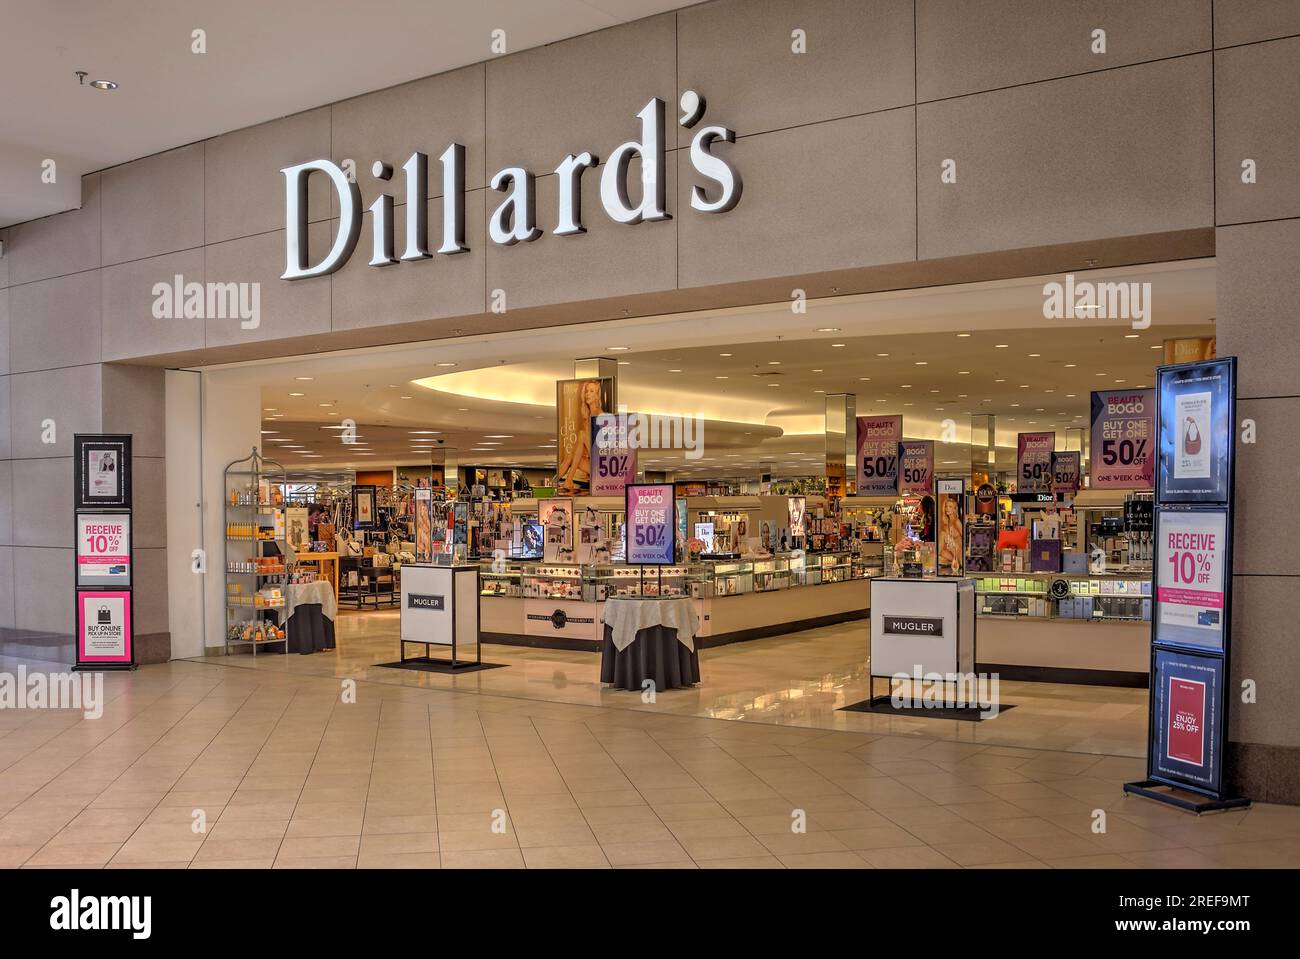 Dillard's, 921 Eastchester Dr, High Point, NC, Retail Shops - MapQuest